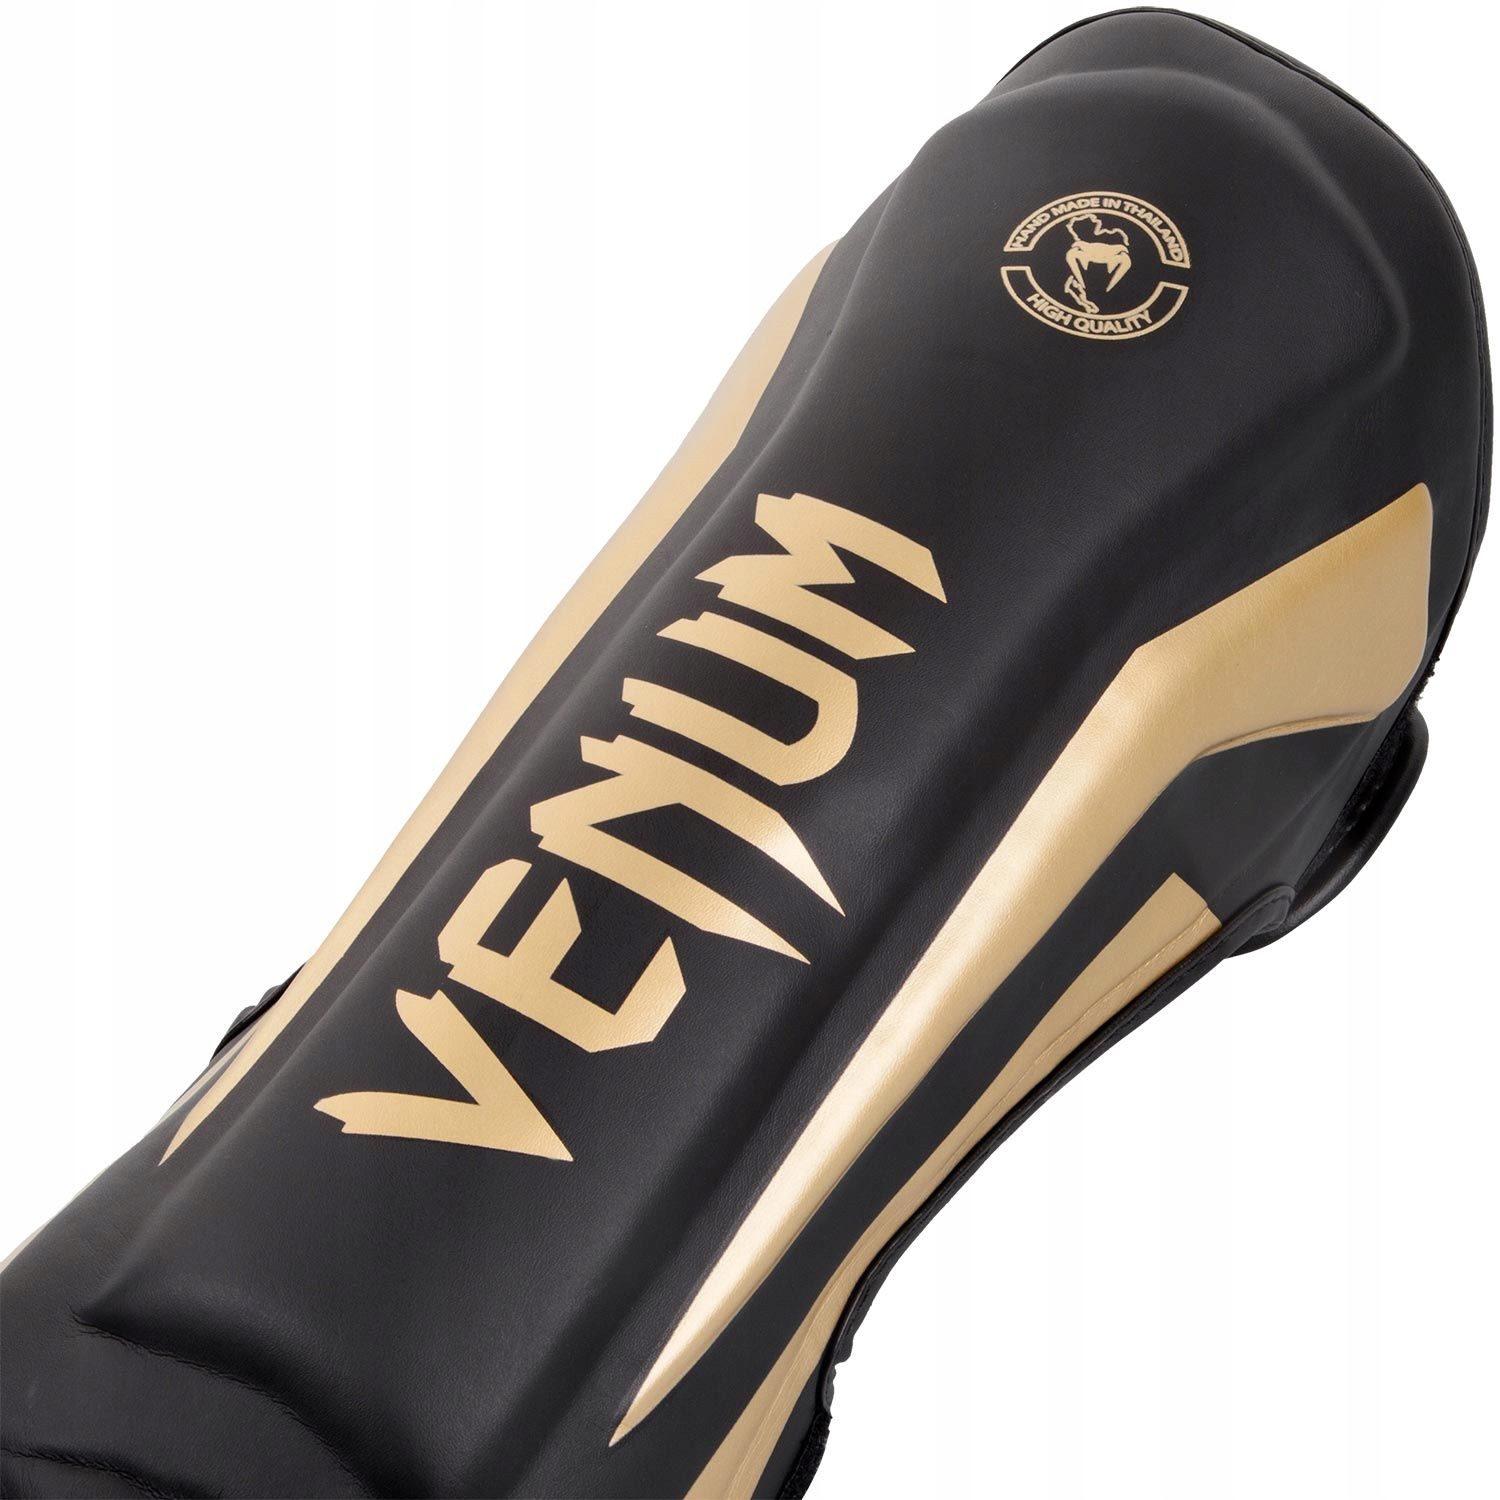 VENUM голени протекторы ELITE BLACK / GOLD L код производителя VENUM-1394-126-L